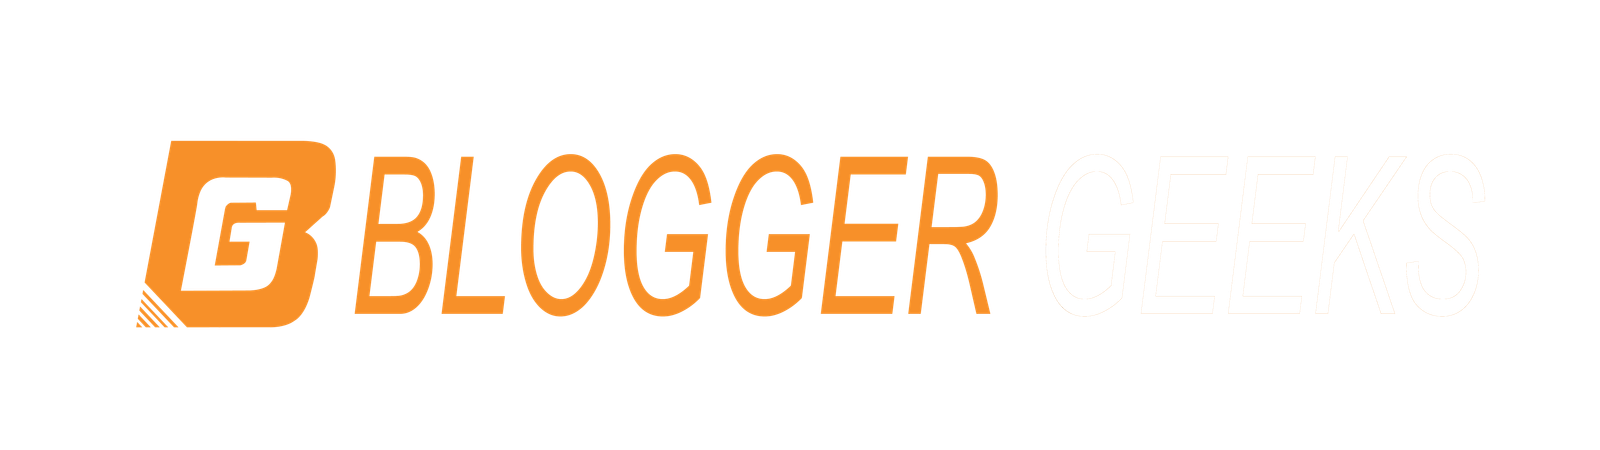 BloggerGeeks